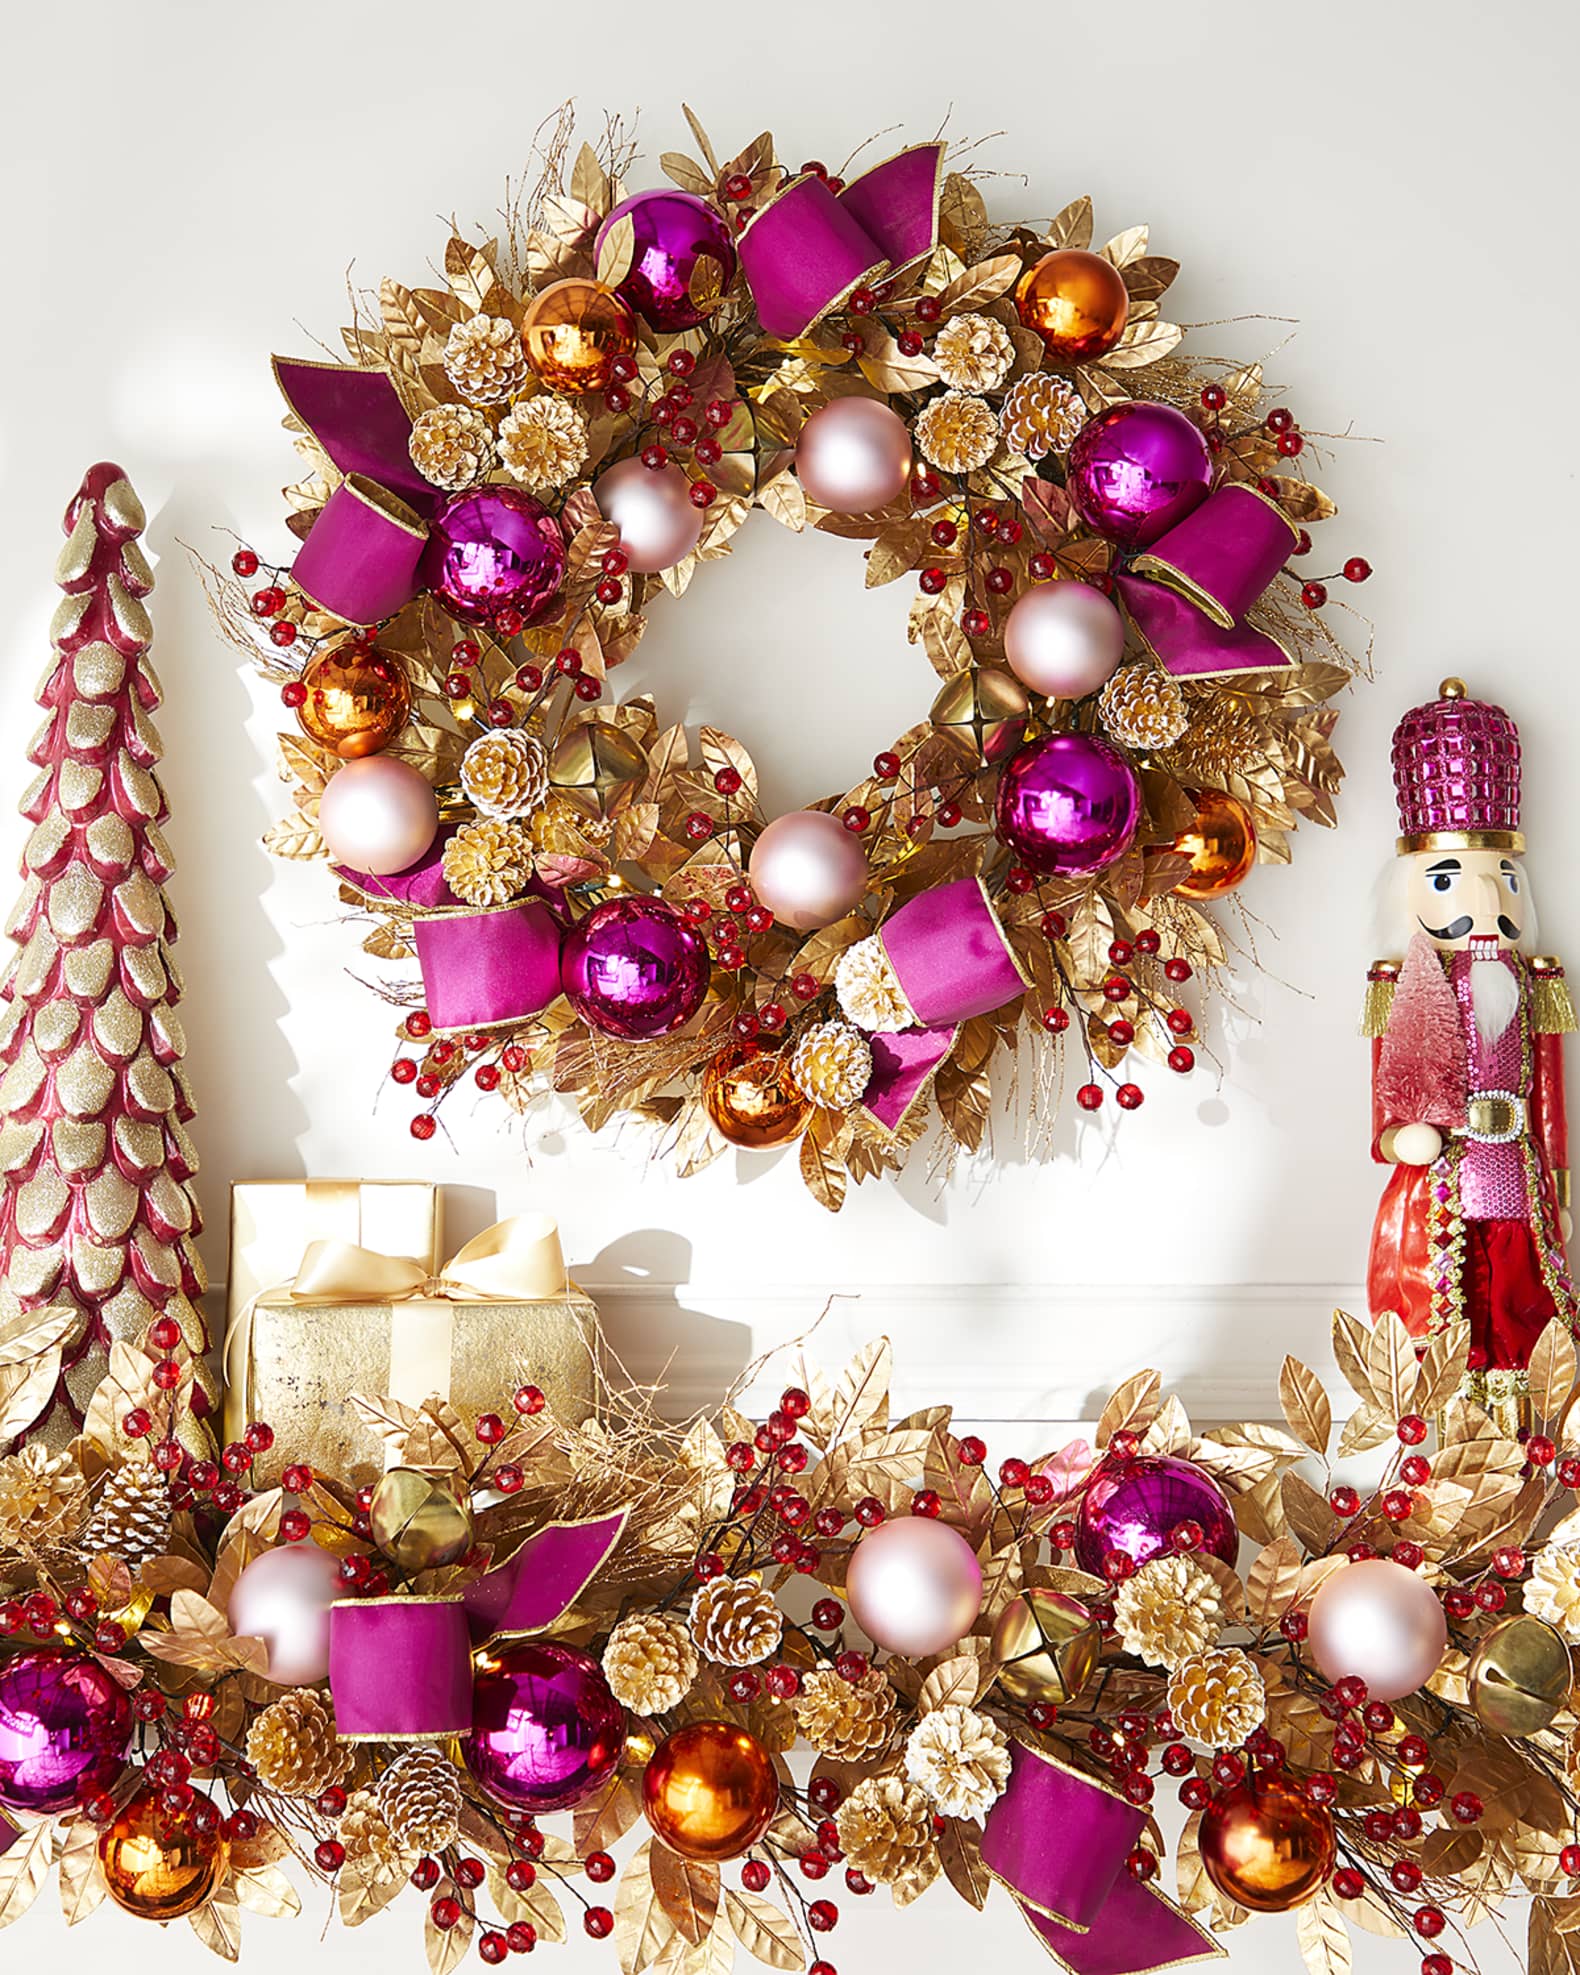 Neiman Marcus 28" Bright Holiday PreLit Wreath Horchow